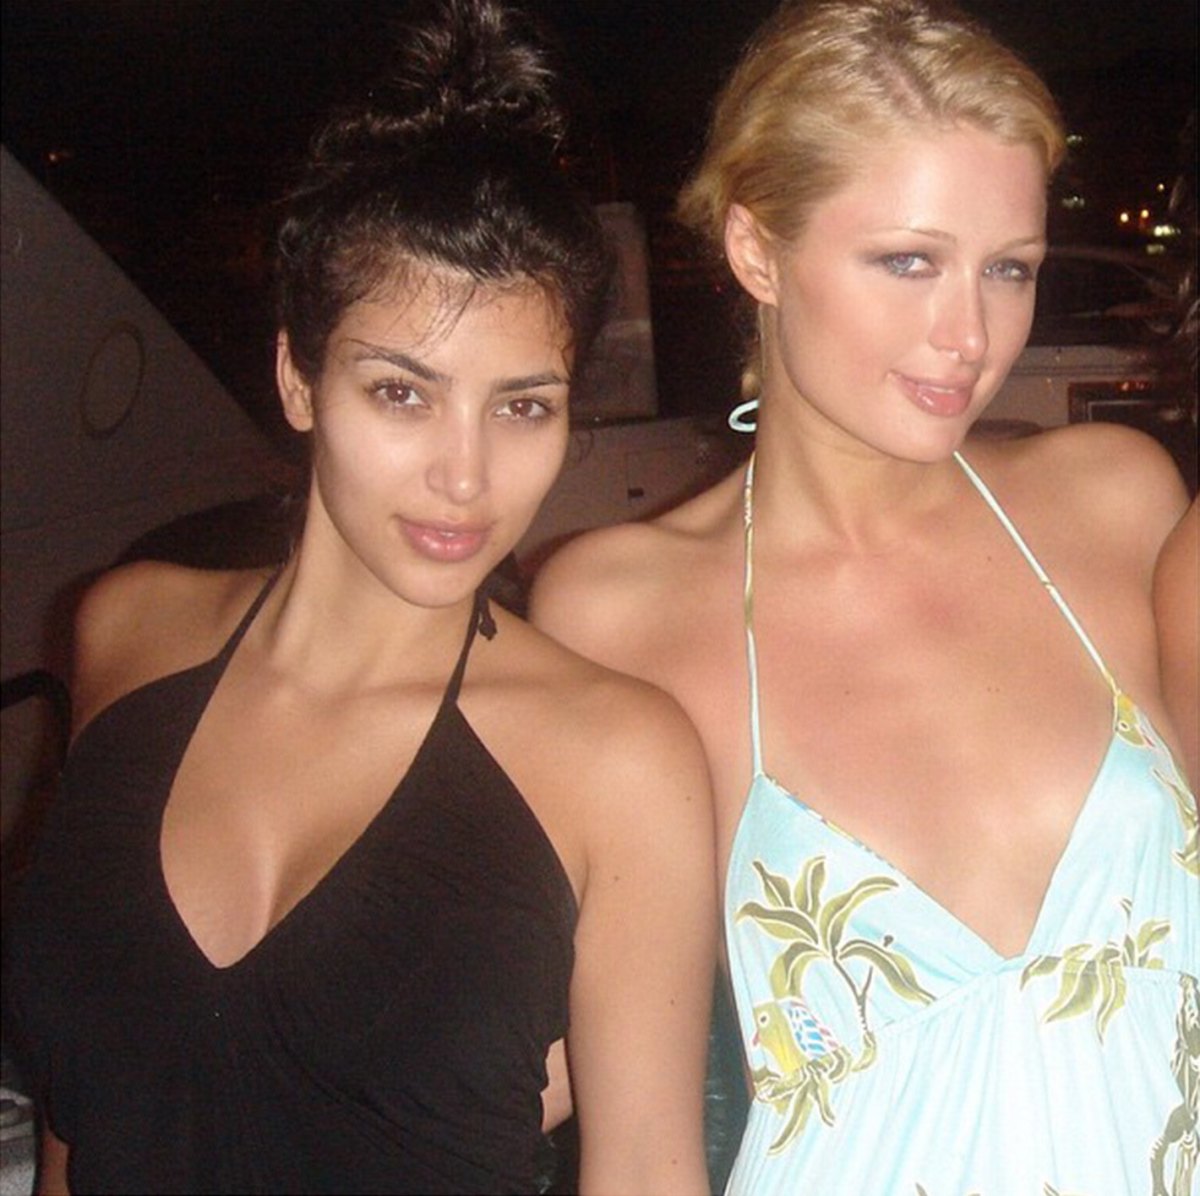 TBT: See Photos of Paris Hilton and Kim Kardashian When They Were Friends